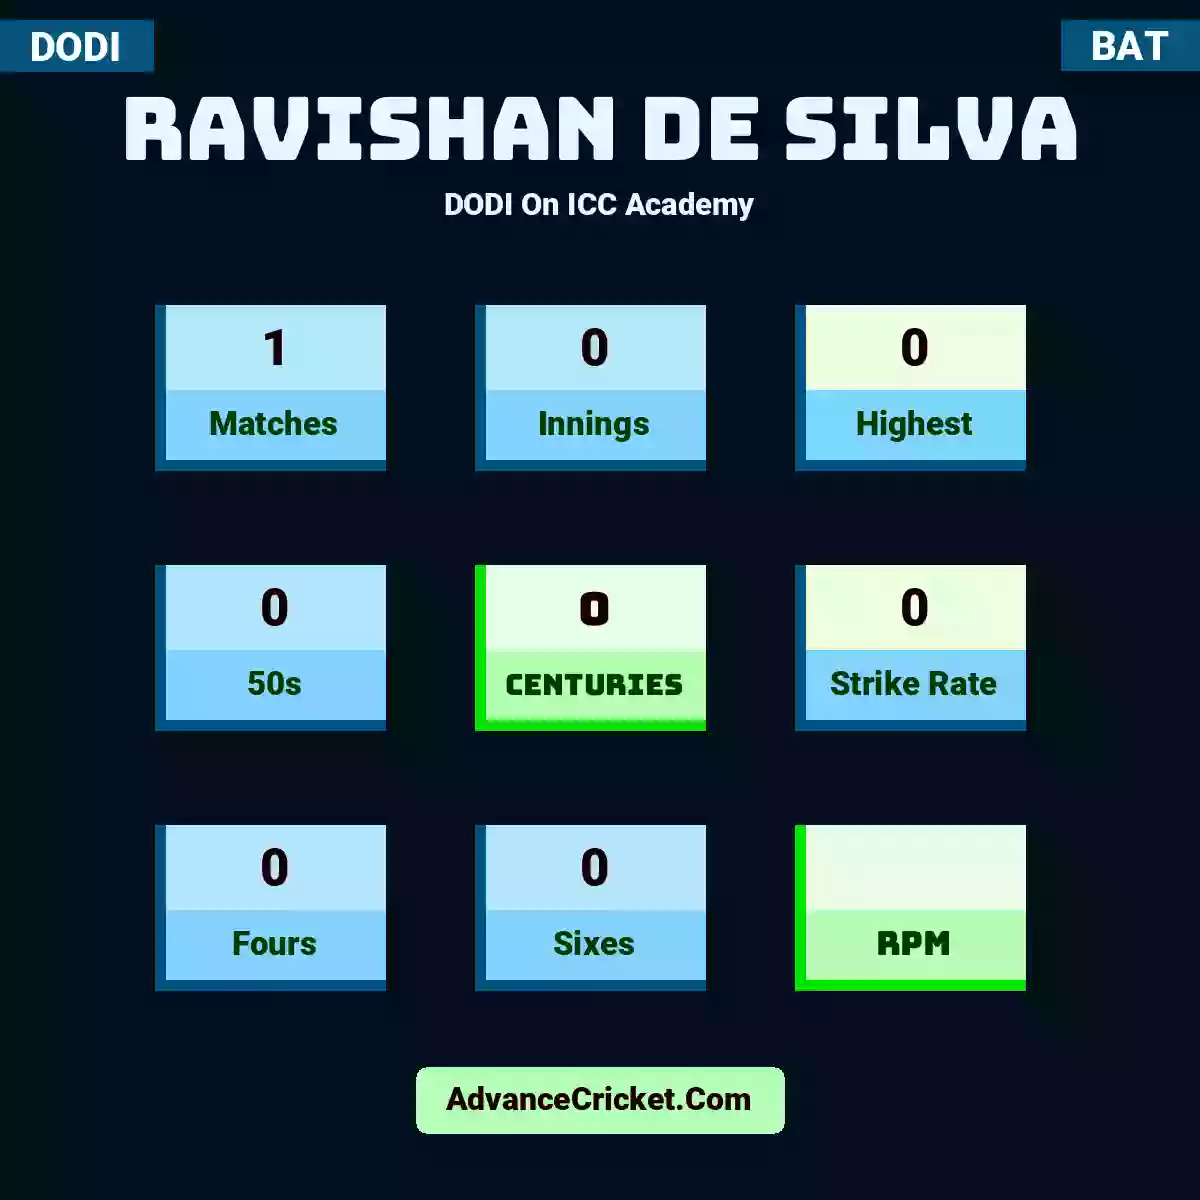 Ravishan De Silva DODI  On ICC Academy, Ravishan De Silva played 1 matches, scored 0 runs as highest, 0 half-centuries, and 0 centuries, with a strike rate of 0. R.De.Silva hit 0 fours and 0 sixes.